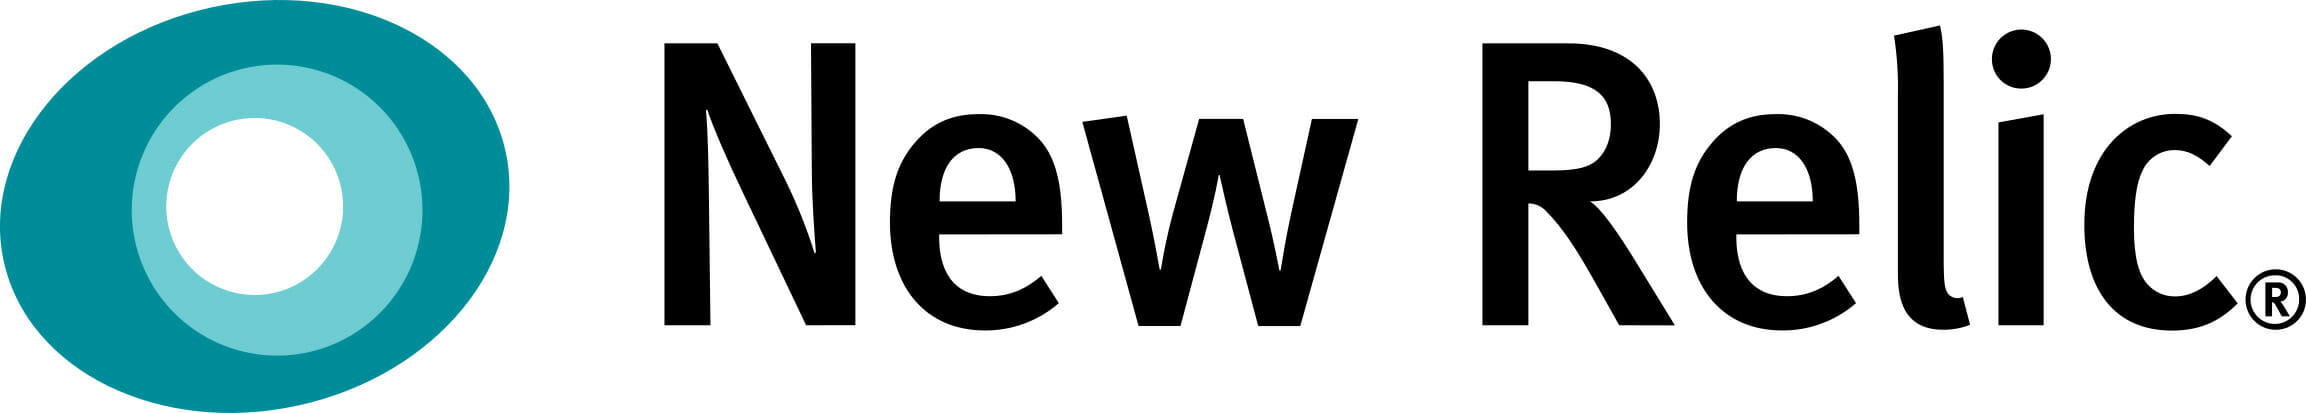 NewRelic logo bug